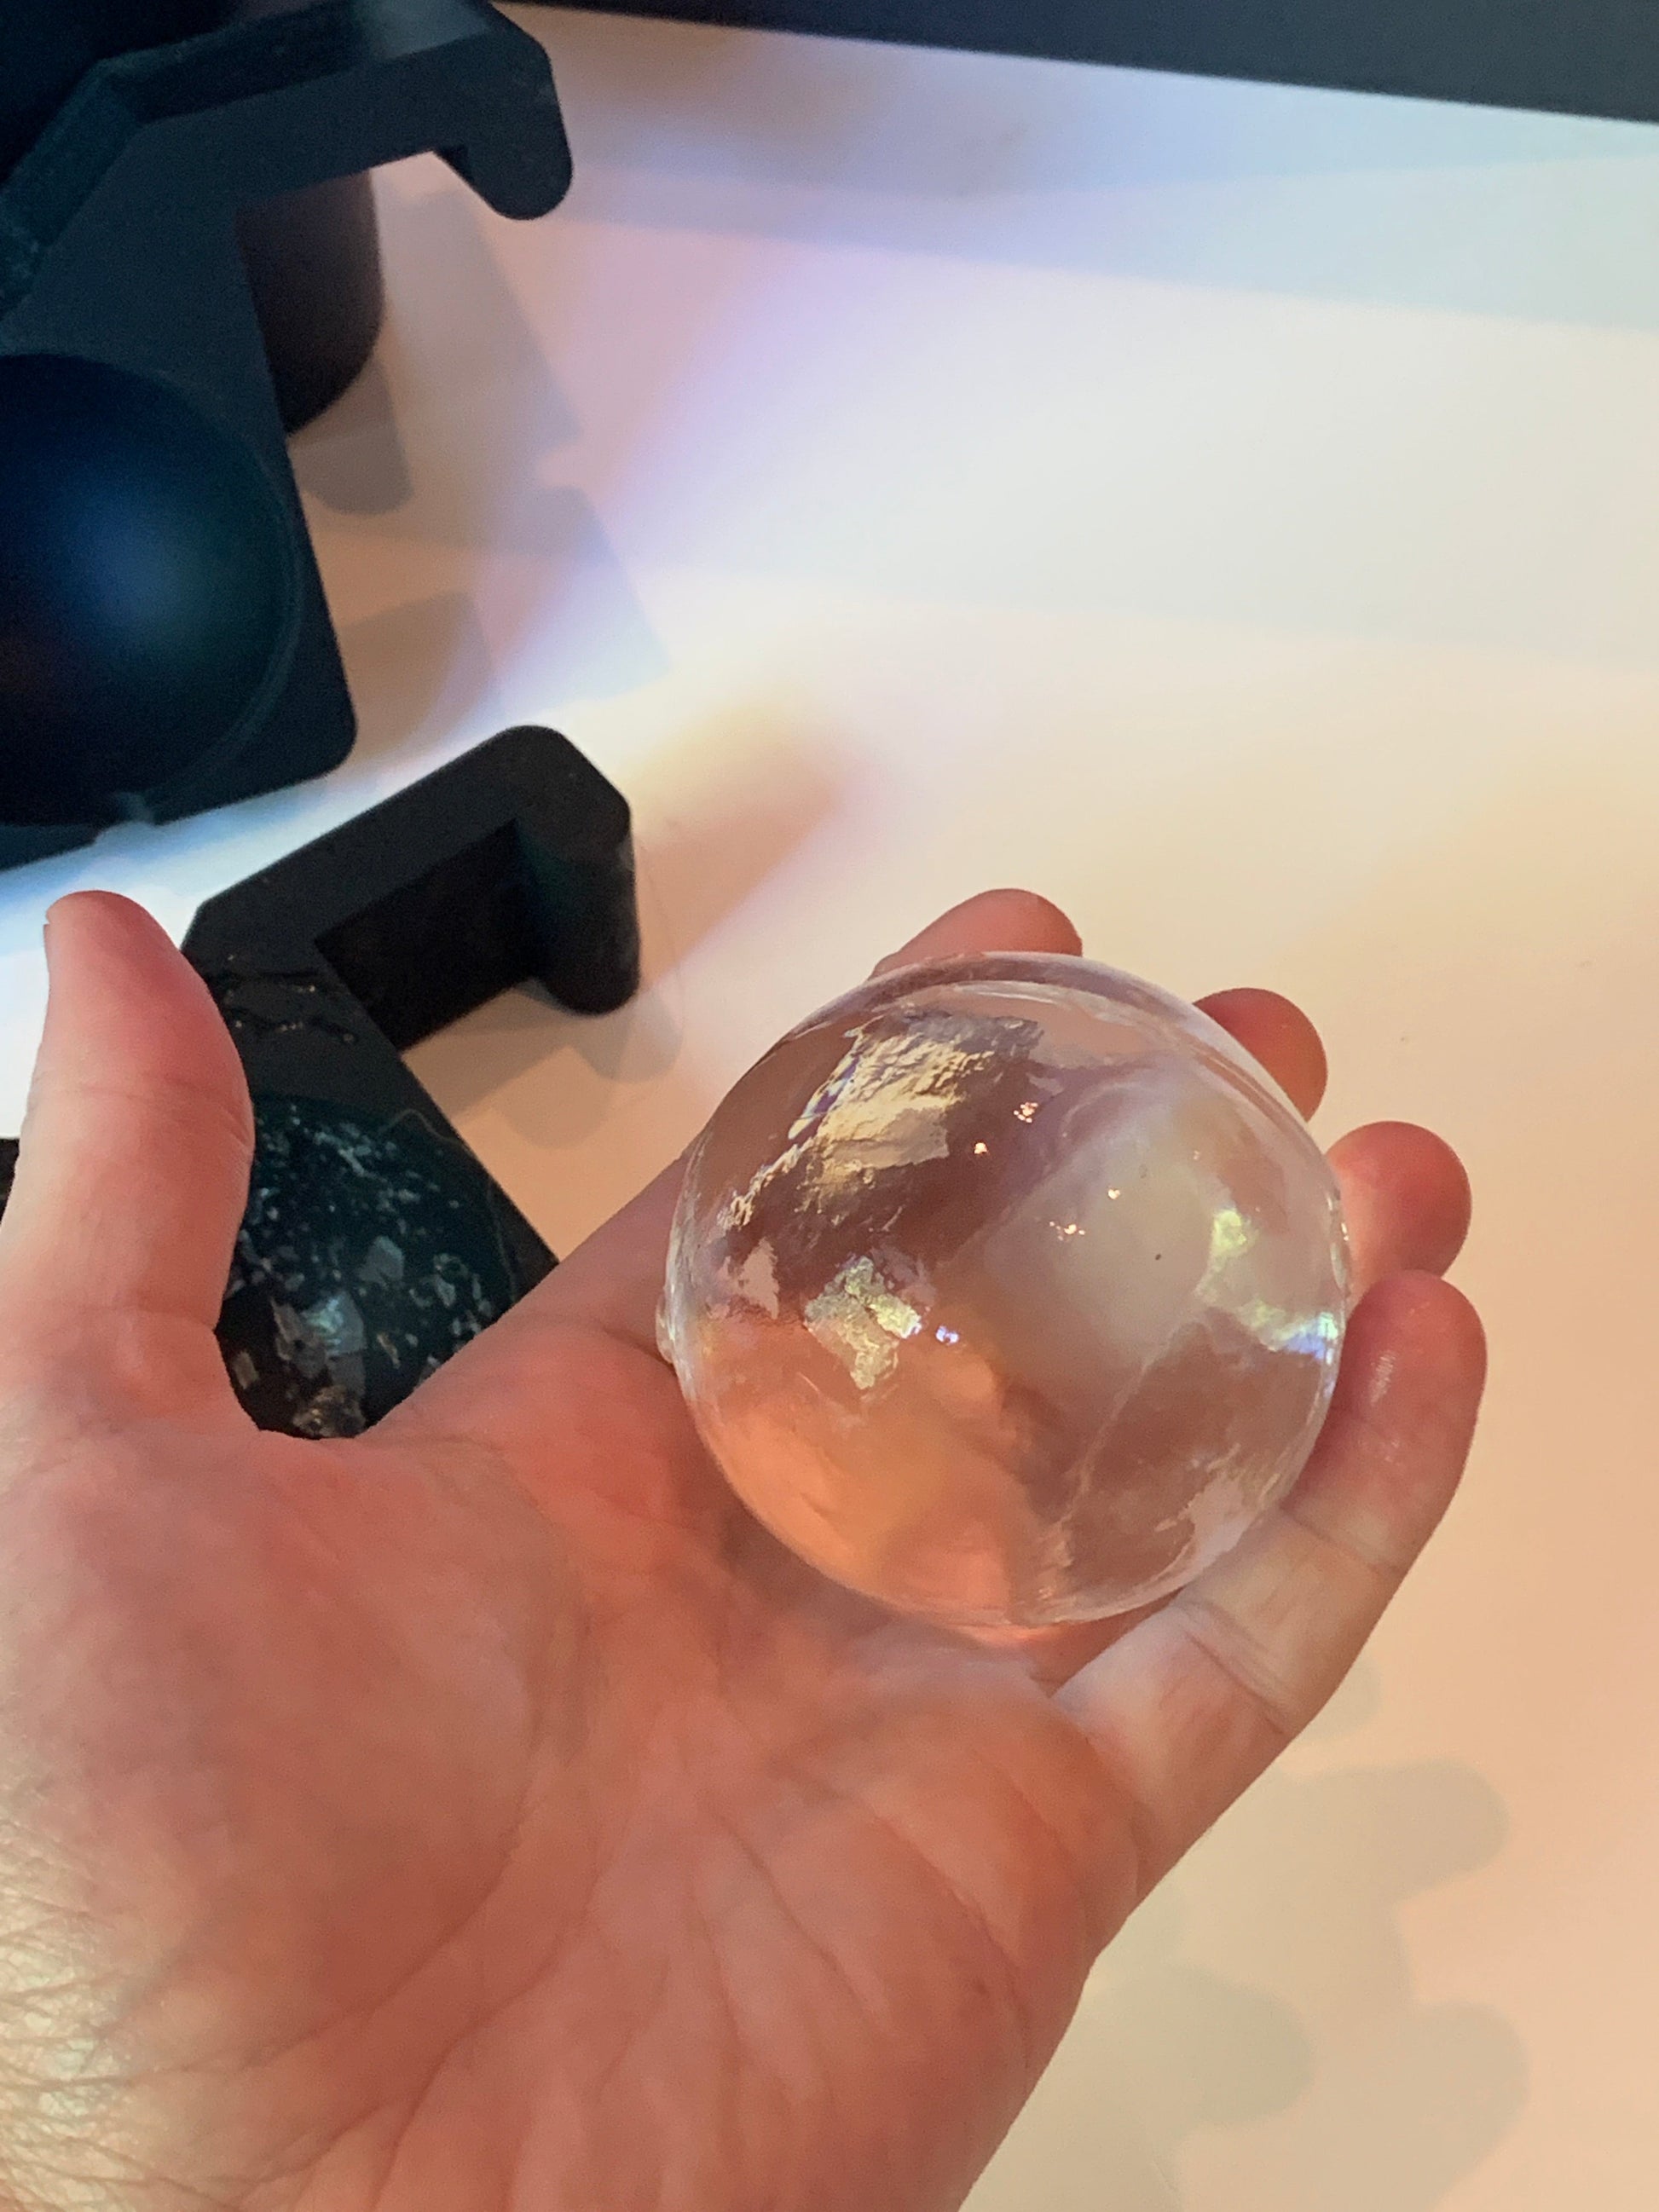 SIMPLETASTE Crystal Clear Ice Ball Maker Mold - 2.36 Inch Clear